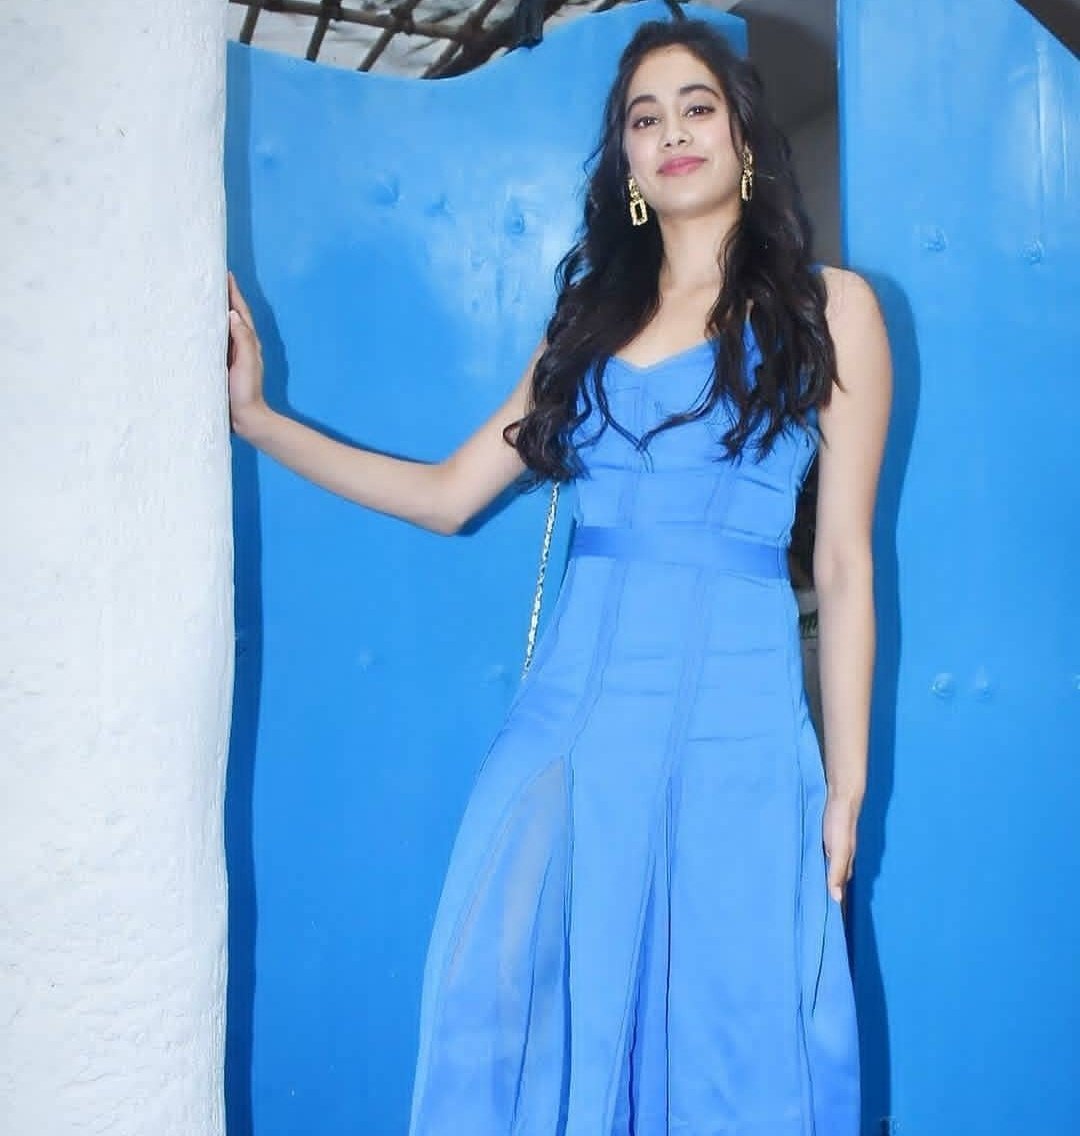  Janhvi Kapoor in Prabal Gurung's Blue Dress